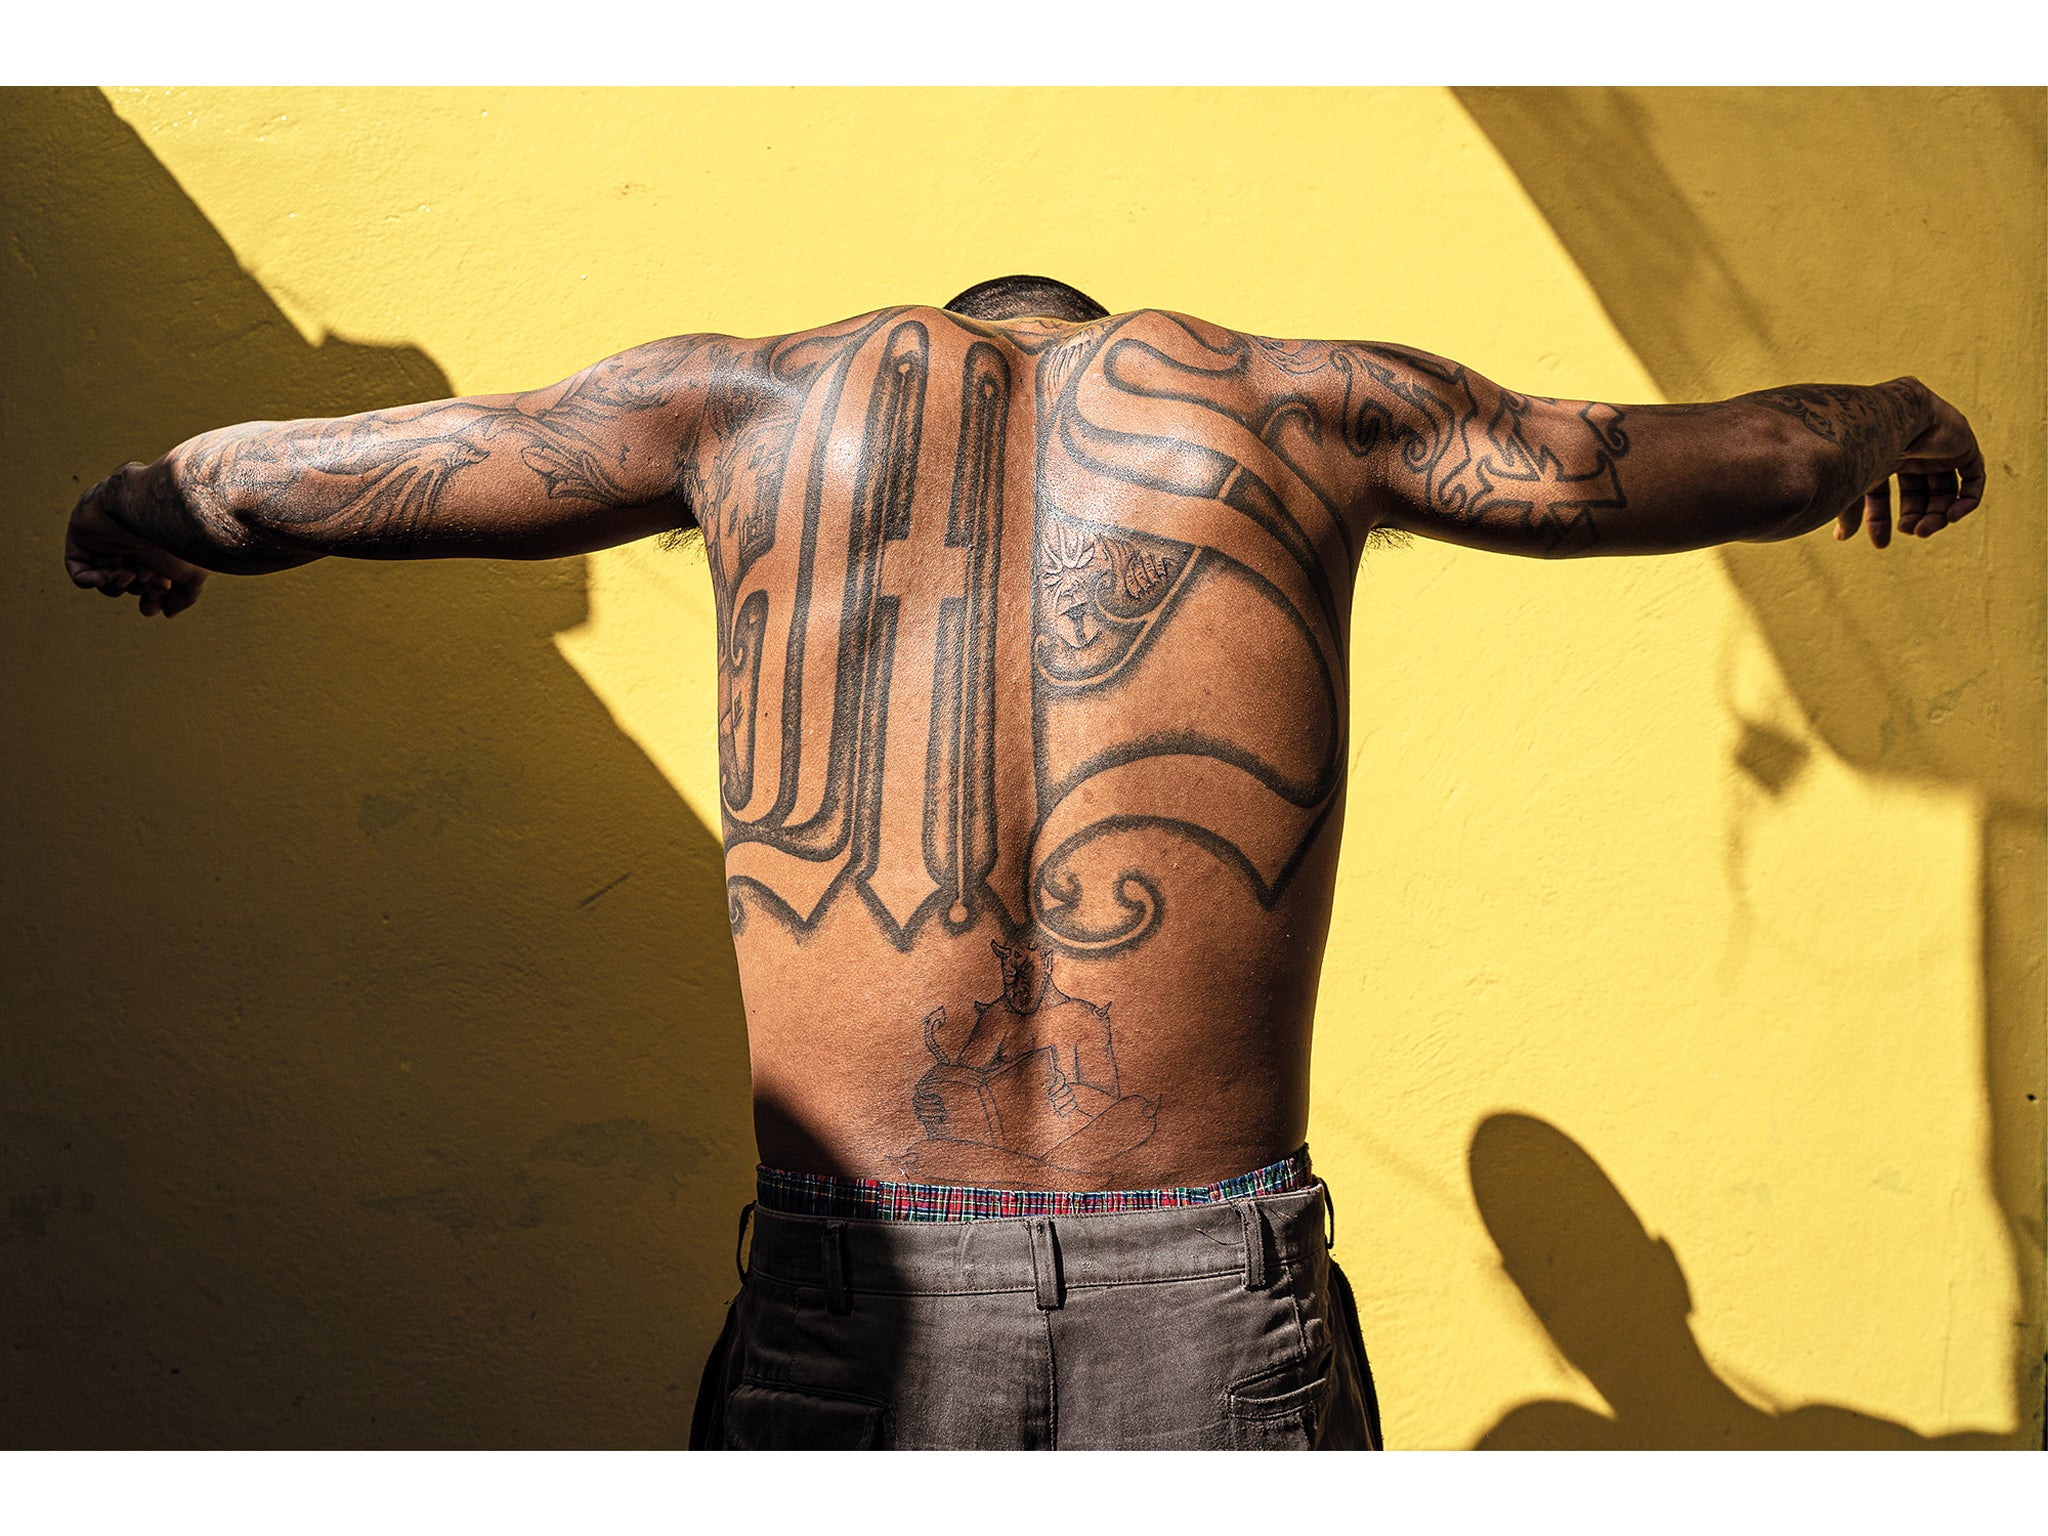 No way out A look inside El Salvadors brutal gang culture The Independent